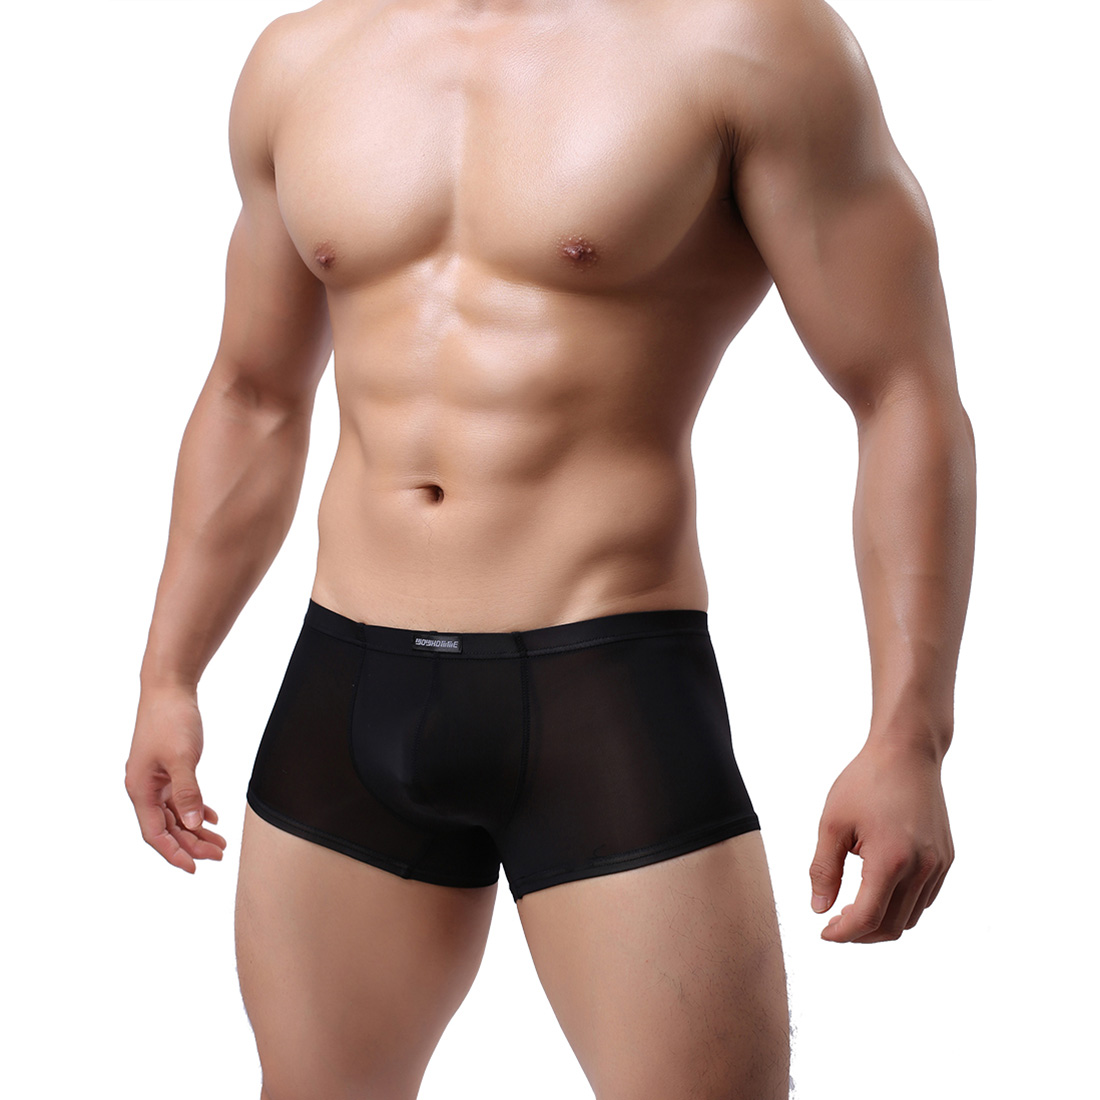 Men's Sexy Lingerie Underwear See-through Boxer Shorts Underpants WH42 Black M